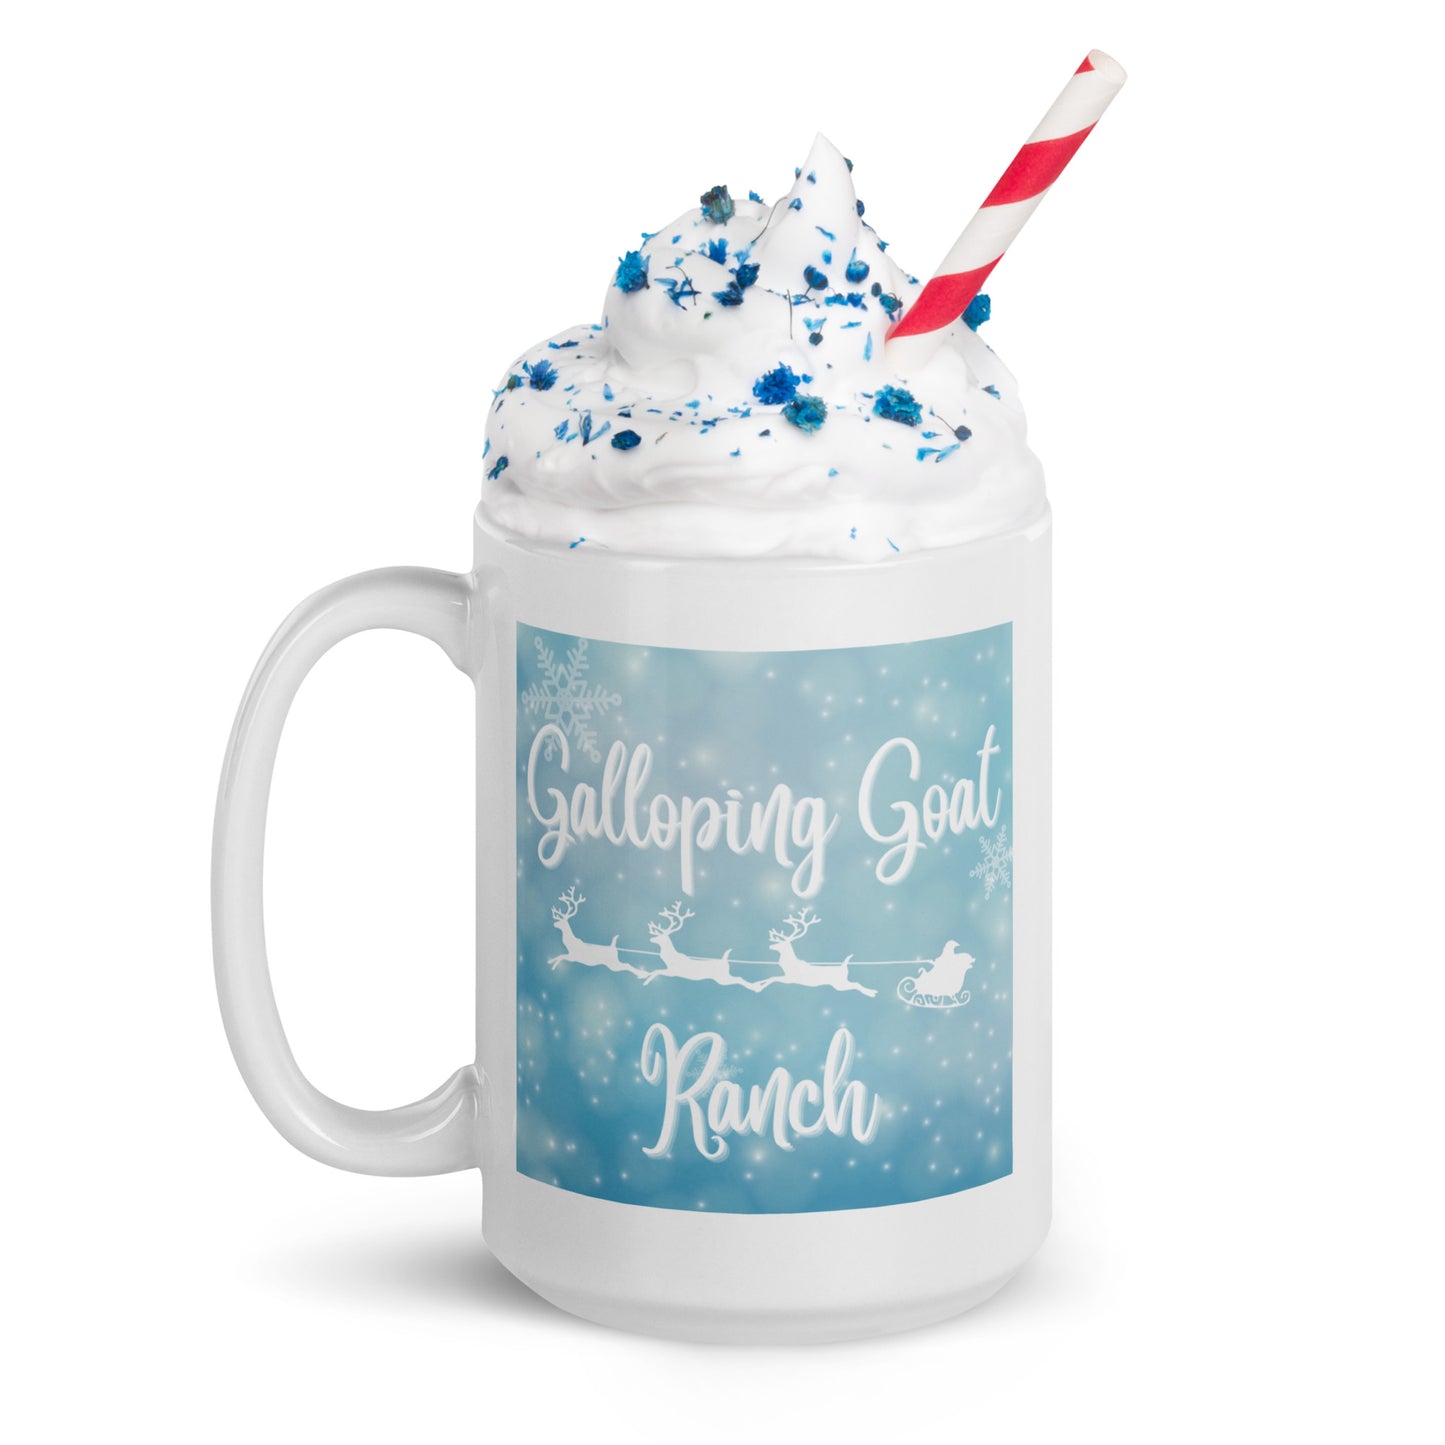 Galloping Goat Sleigh: White glossy mug